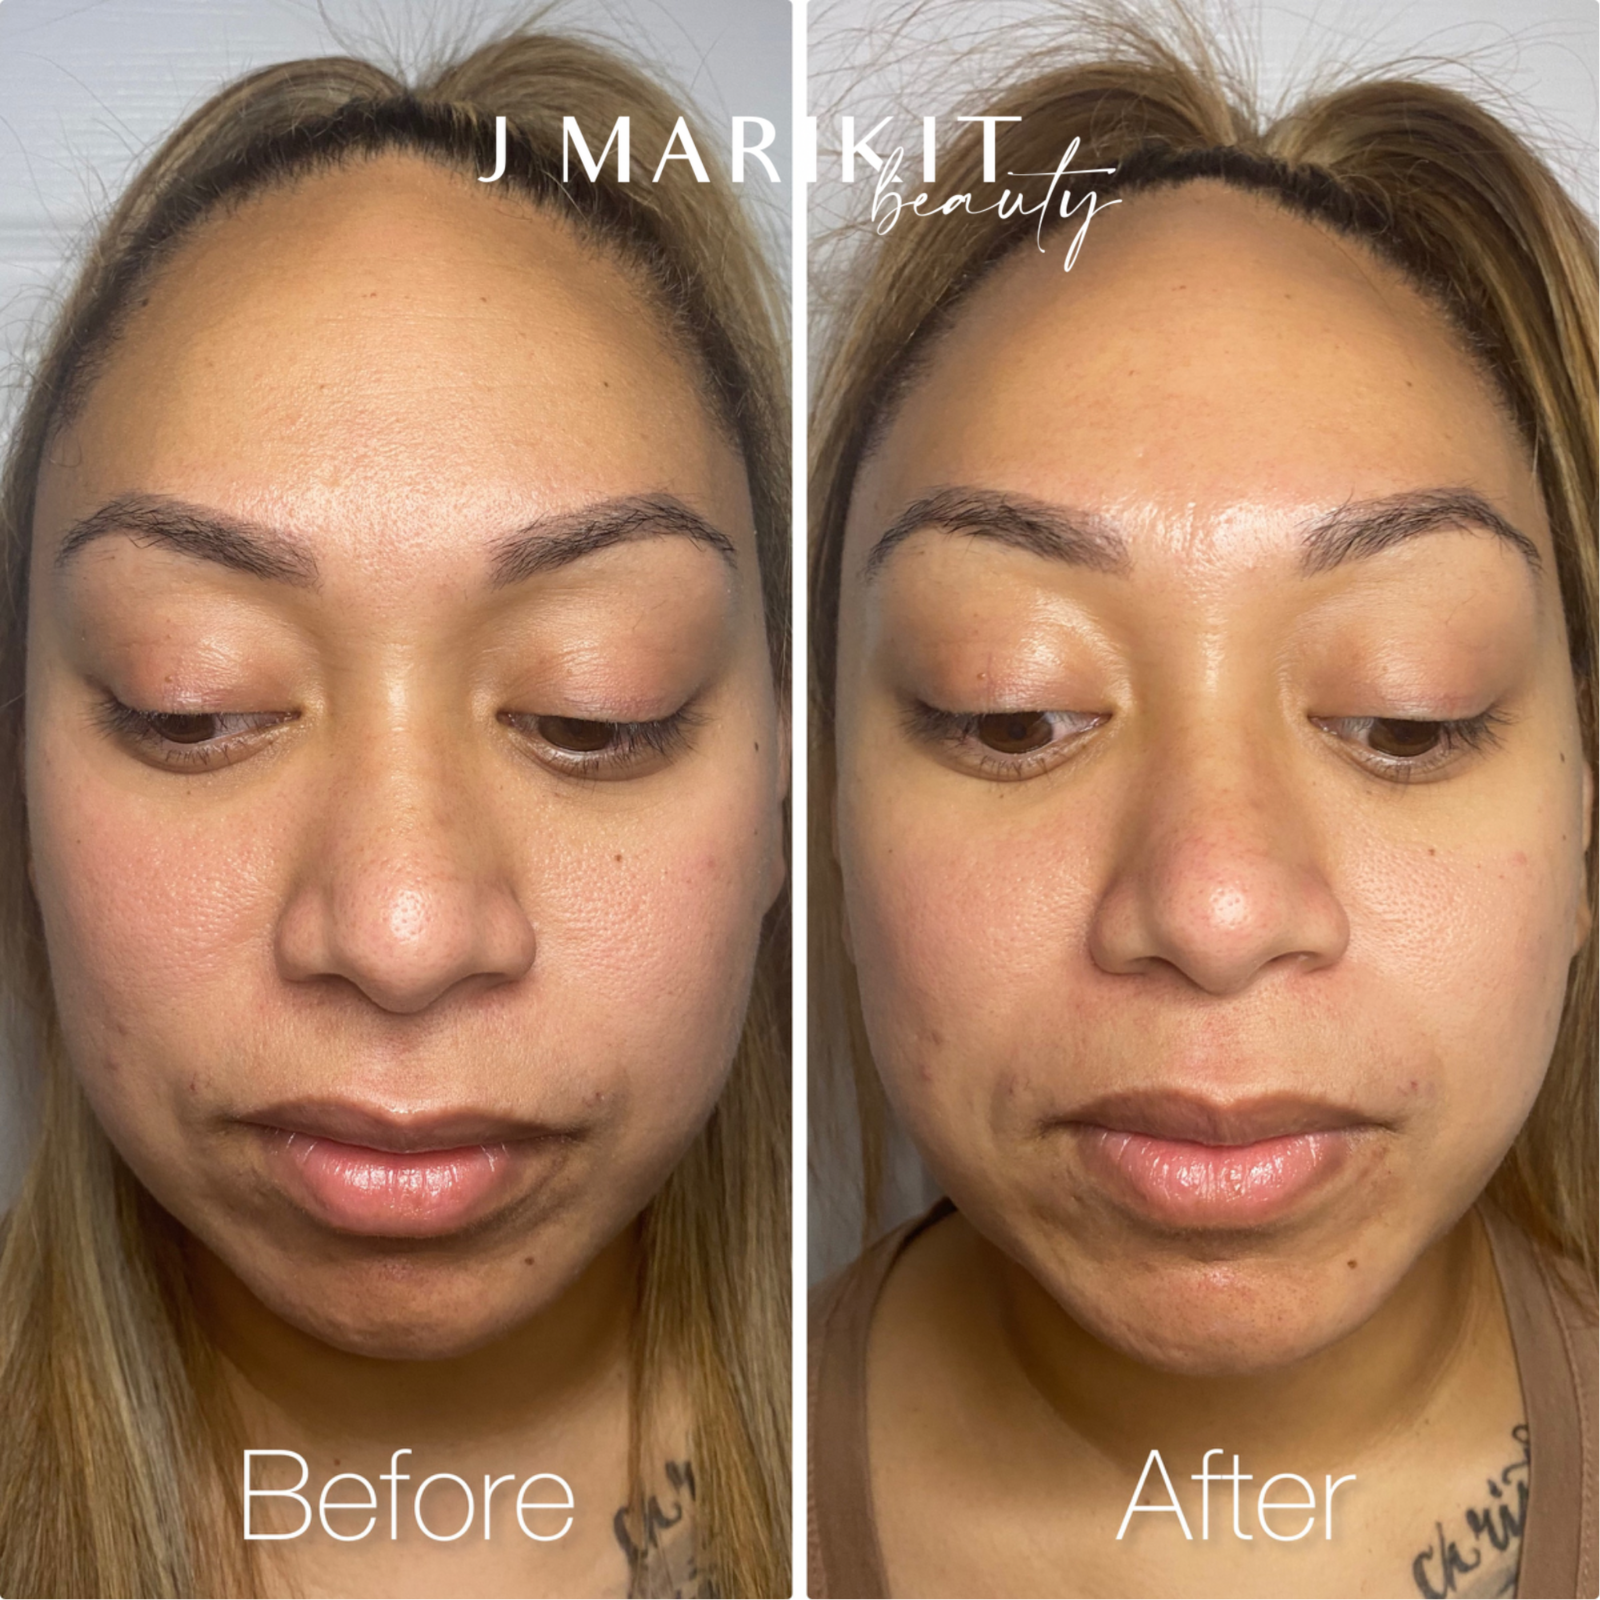 Honolulu skin exfoliation treatment provided by JMarkit .